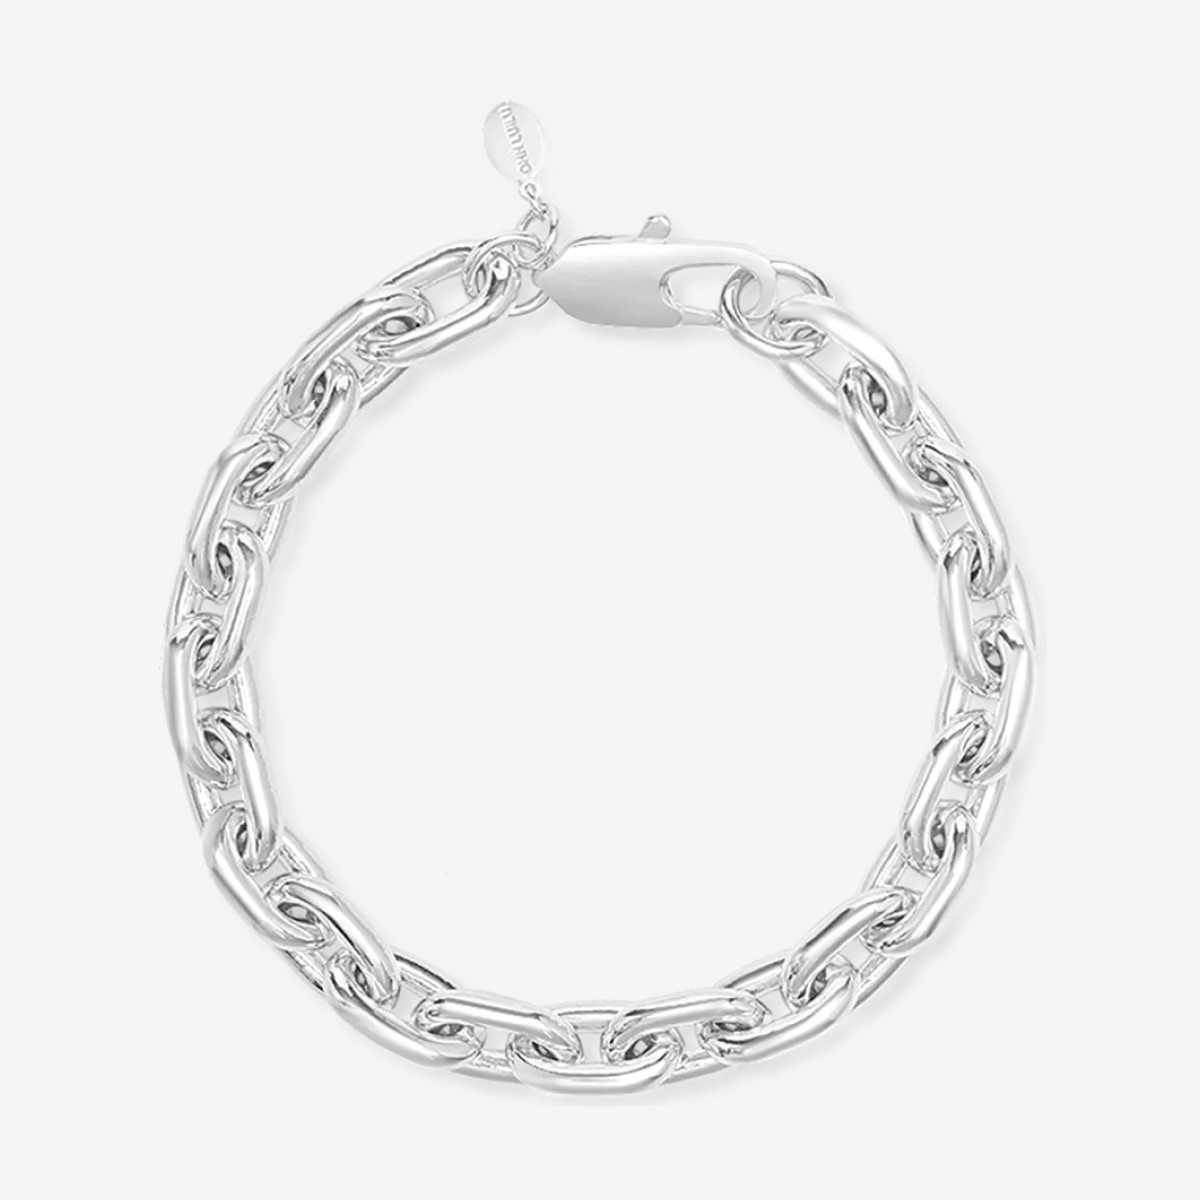 Chunky Bracelet 17 cm - Armbänder - Silber